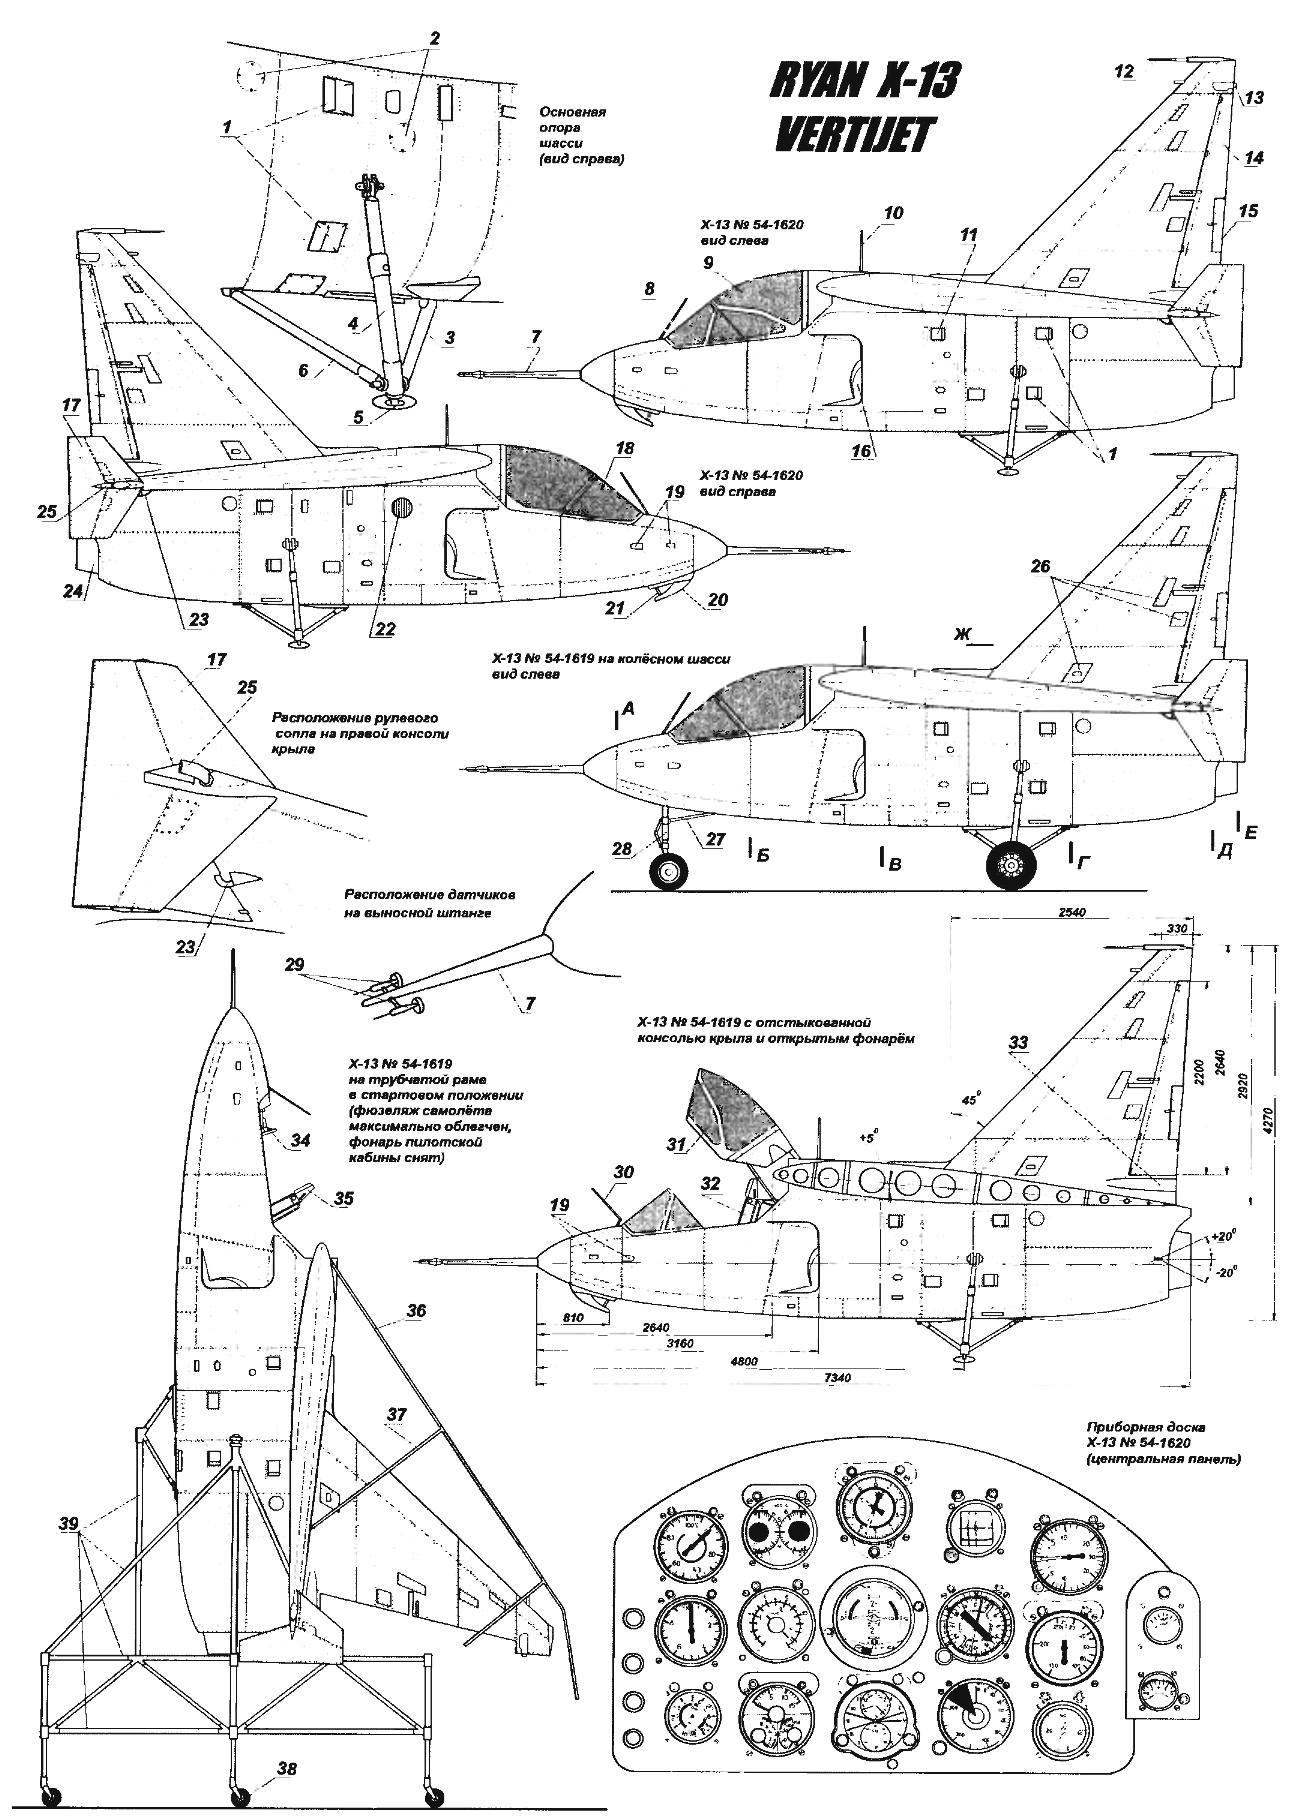 Aircraft vertical takeoff and landing RYAN X-13 VERTIJET